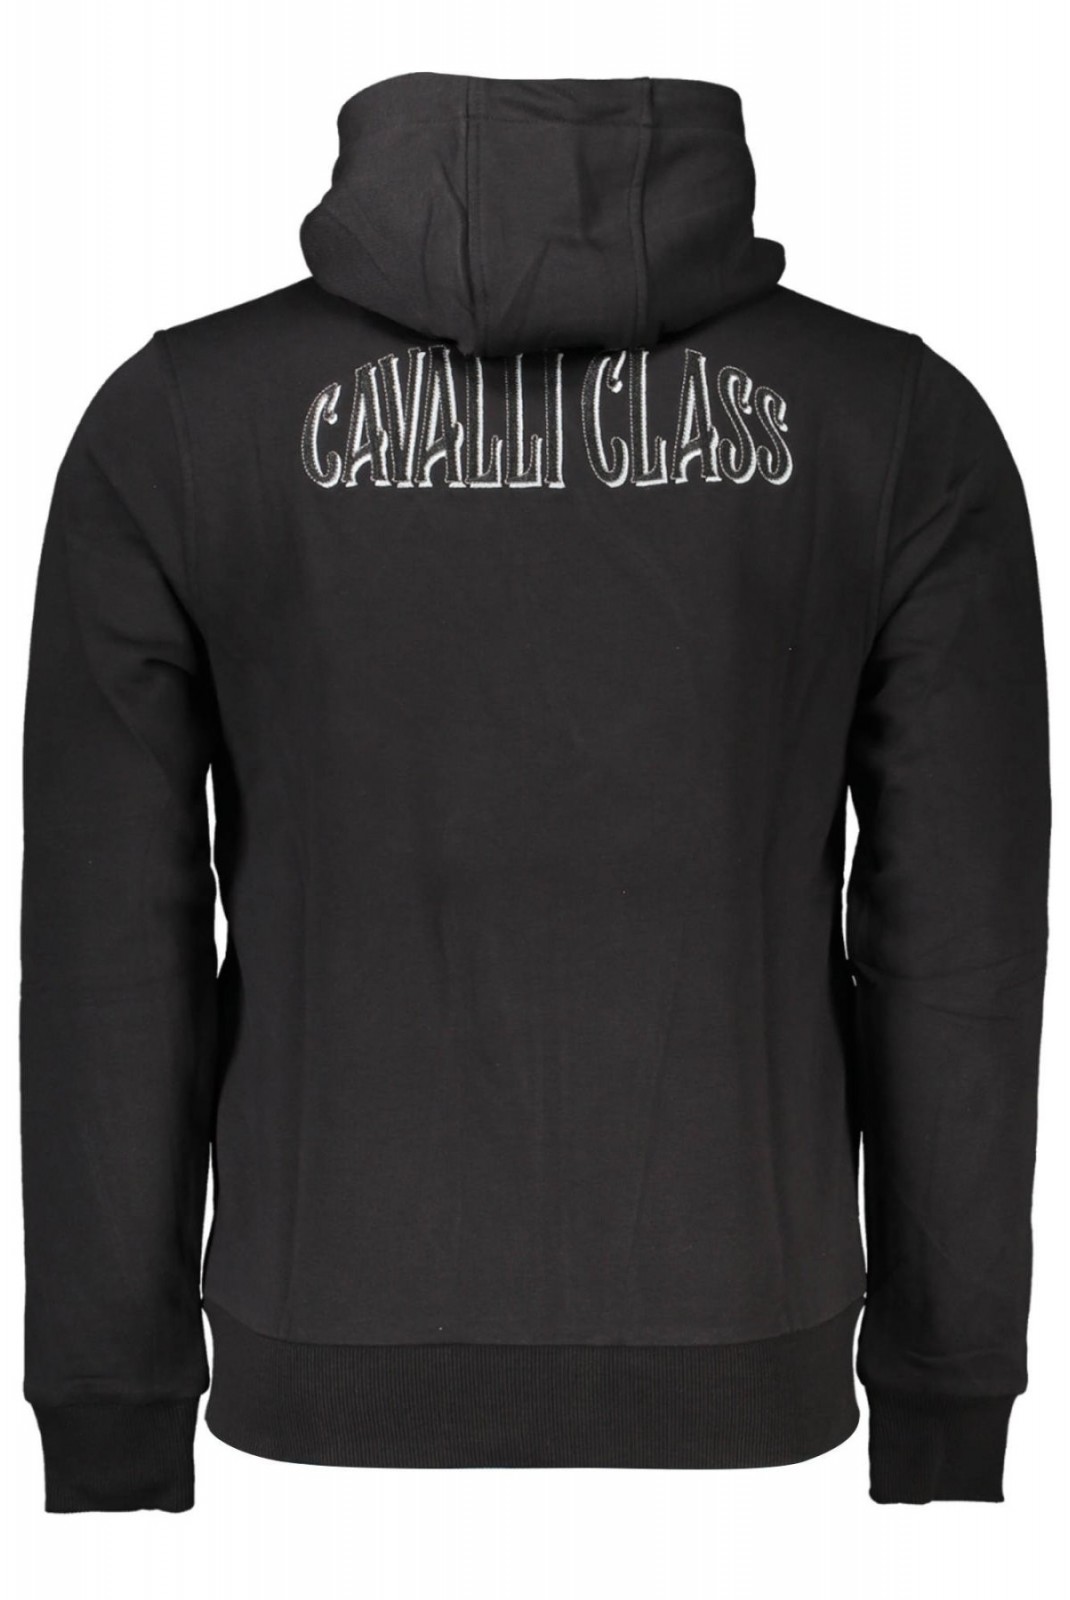 Sweatshirt - CAVALLI CLASS - QXT65C-CF062_NERO_05051 Cavalli Class 5051 nero QXT65C-CF062